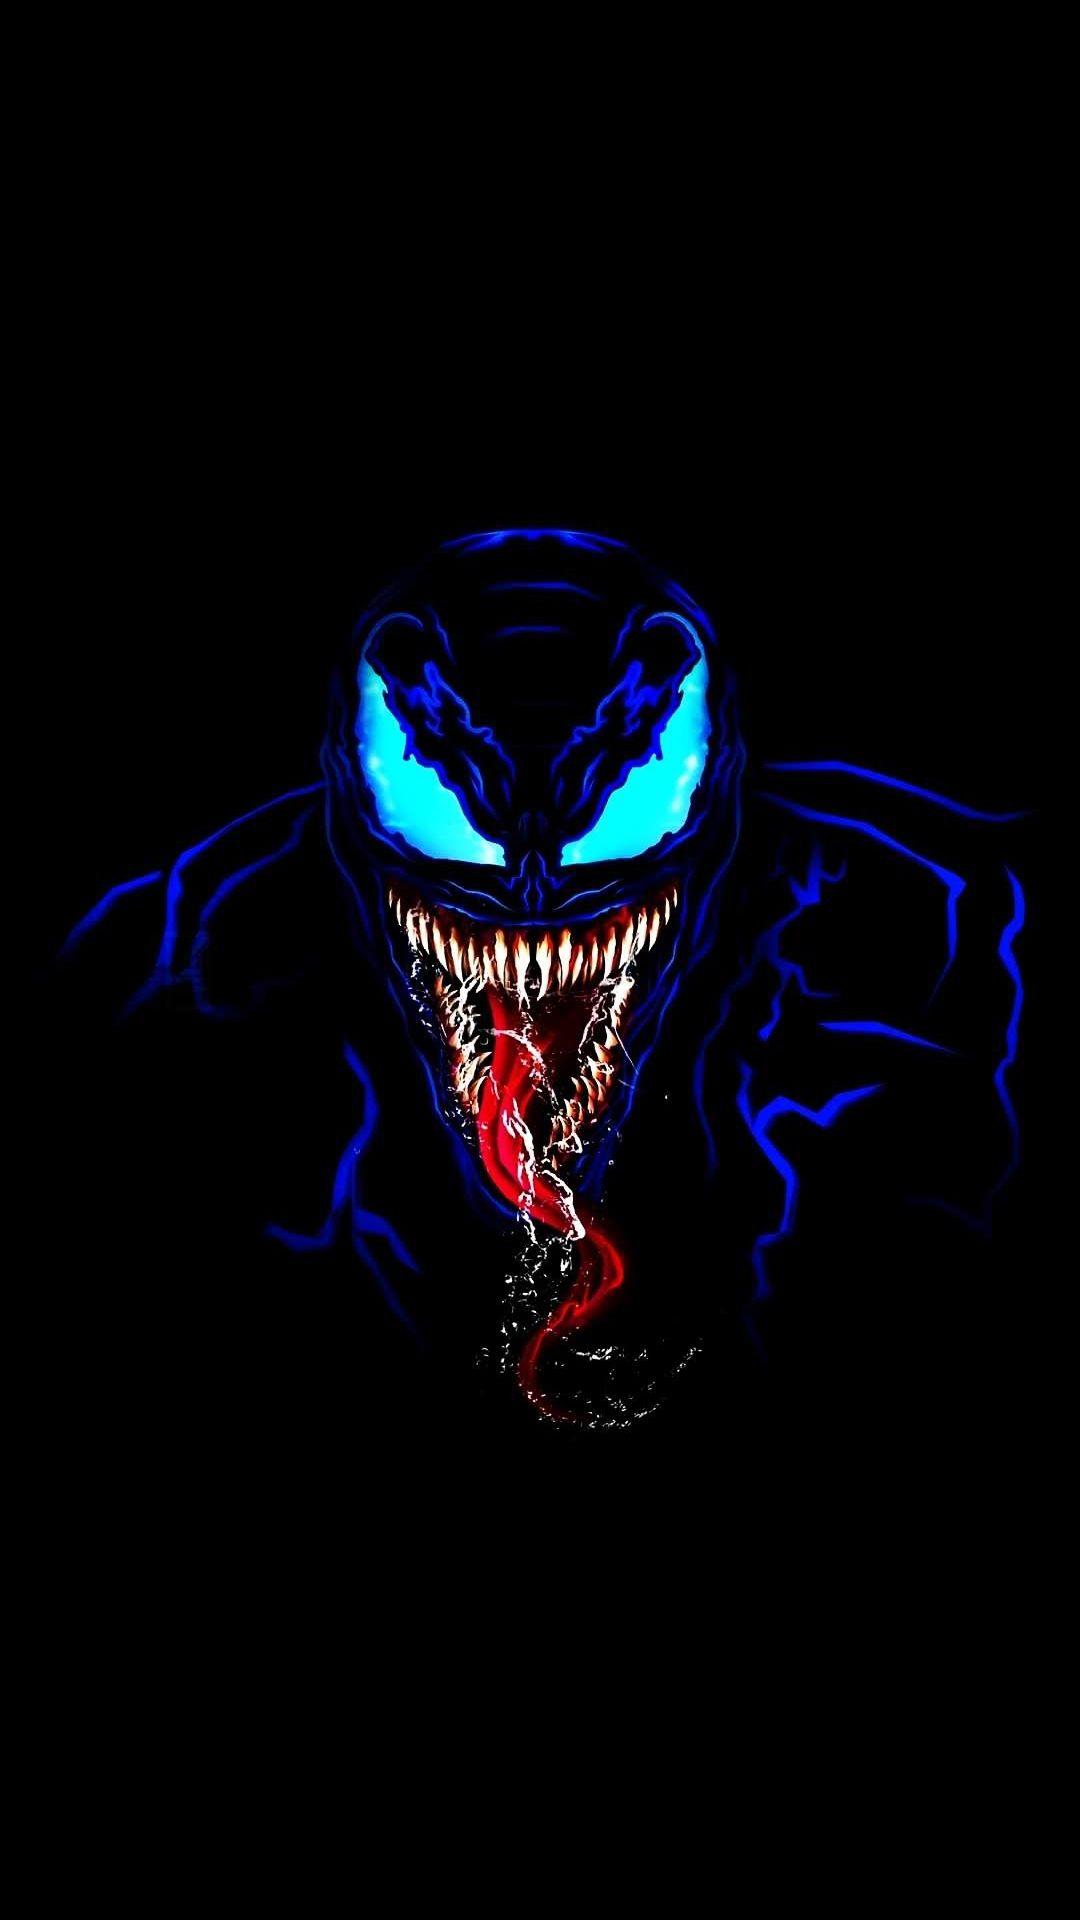 Venom in Dark iPhone Wallpaper. Marvel wallpaper hd, Avengers